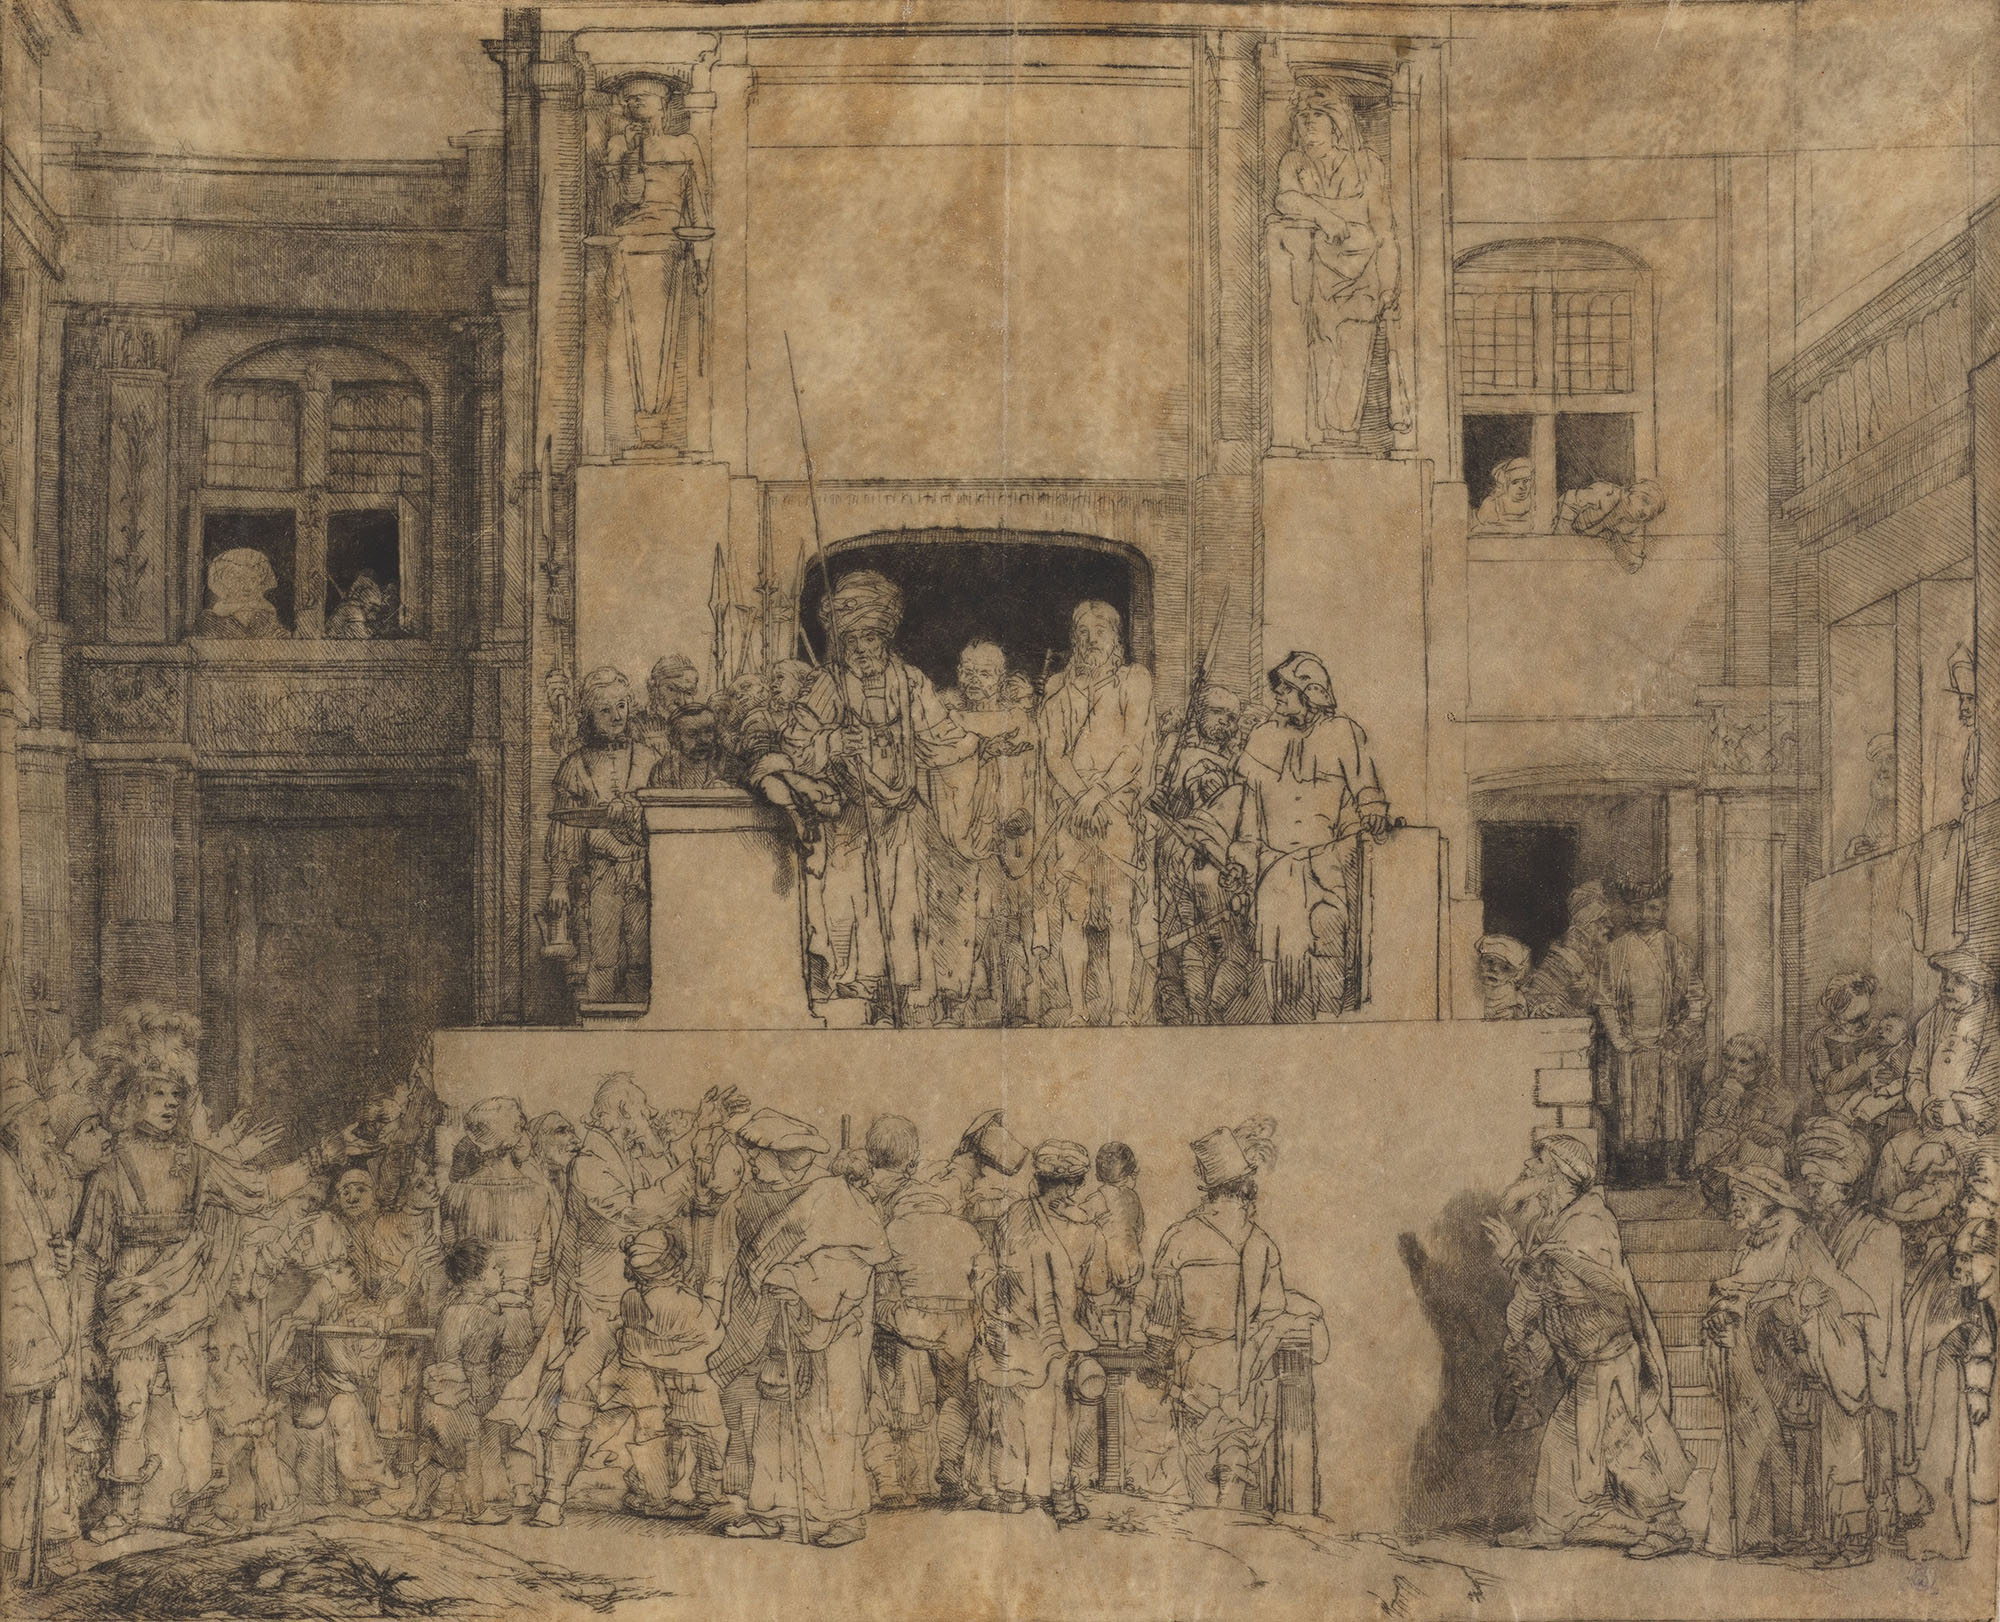 Рембрандт Харменс ван Рейн. "Eccj Homo" ("Се человек"). 1655.